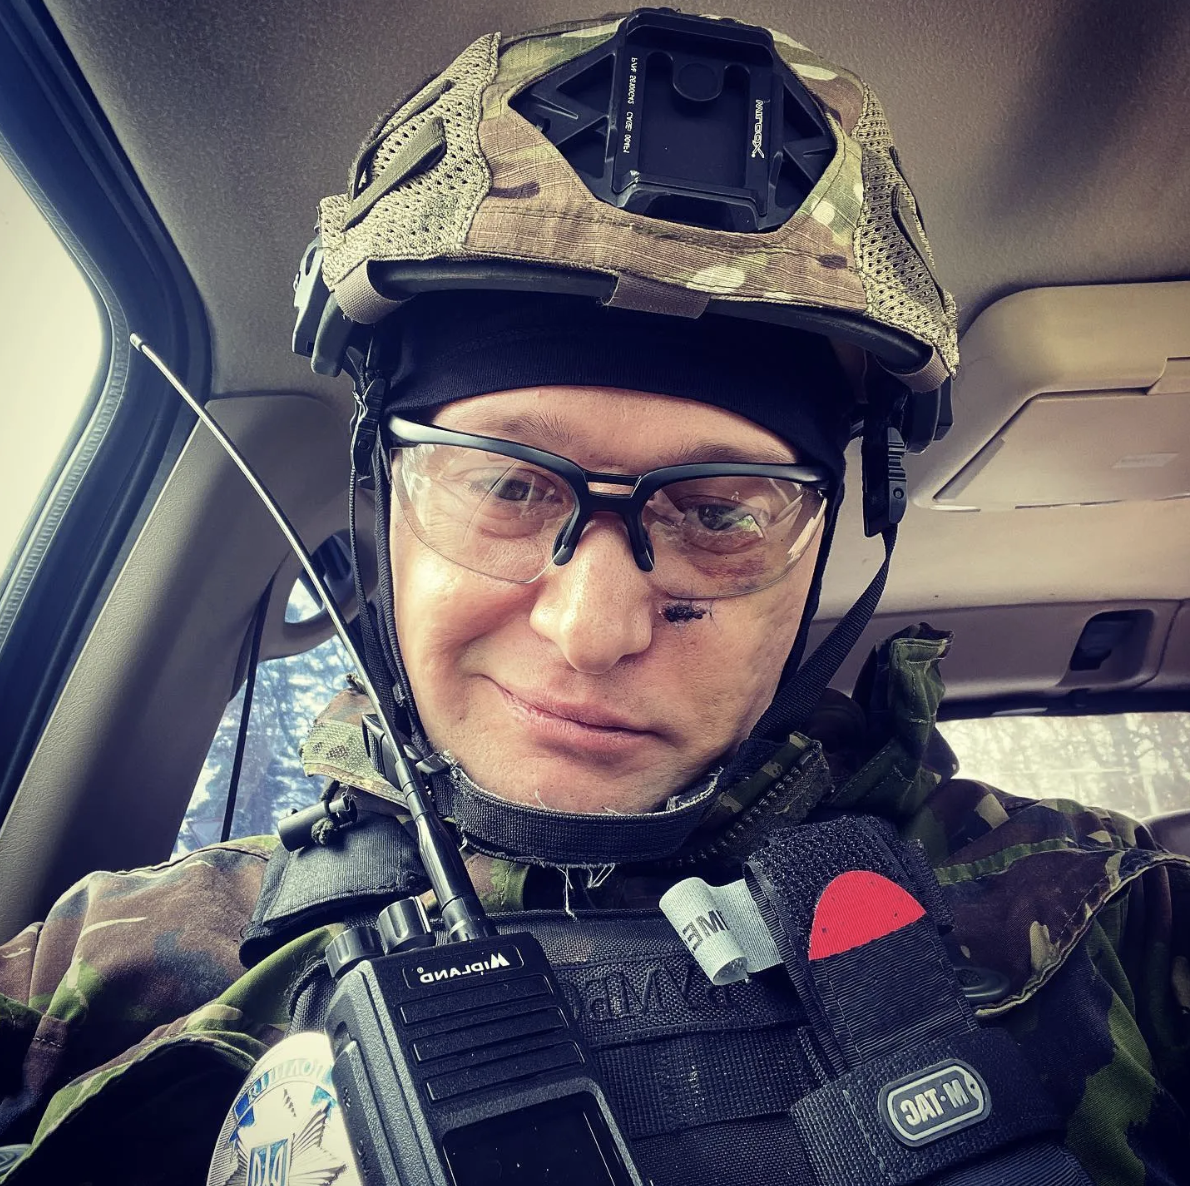 Andriy Khlynyuk in his gear for war. 